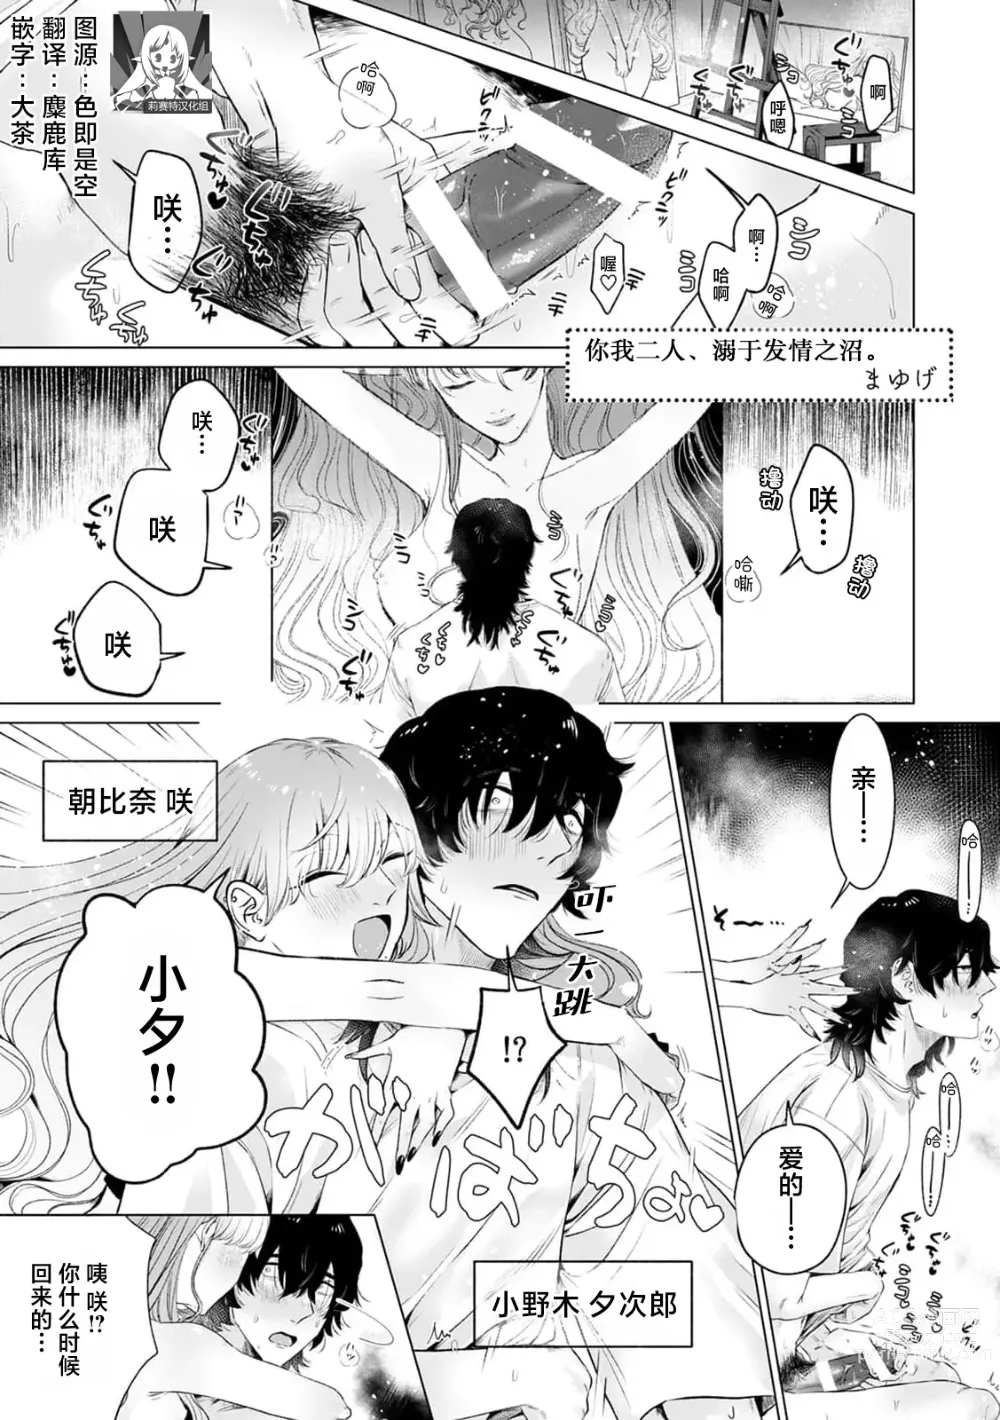 Page 1 of manga 你我二人、深陷发情之沼。